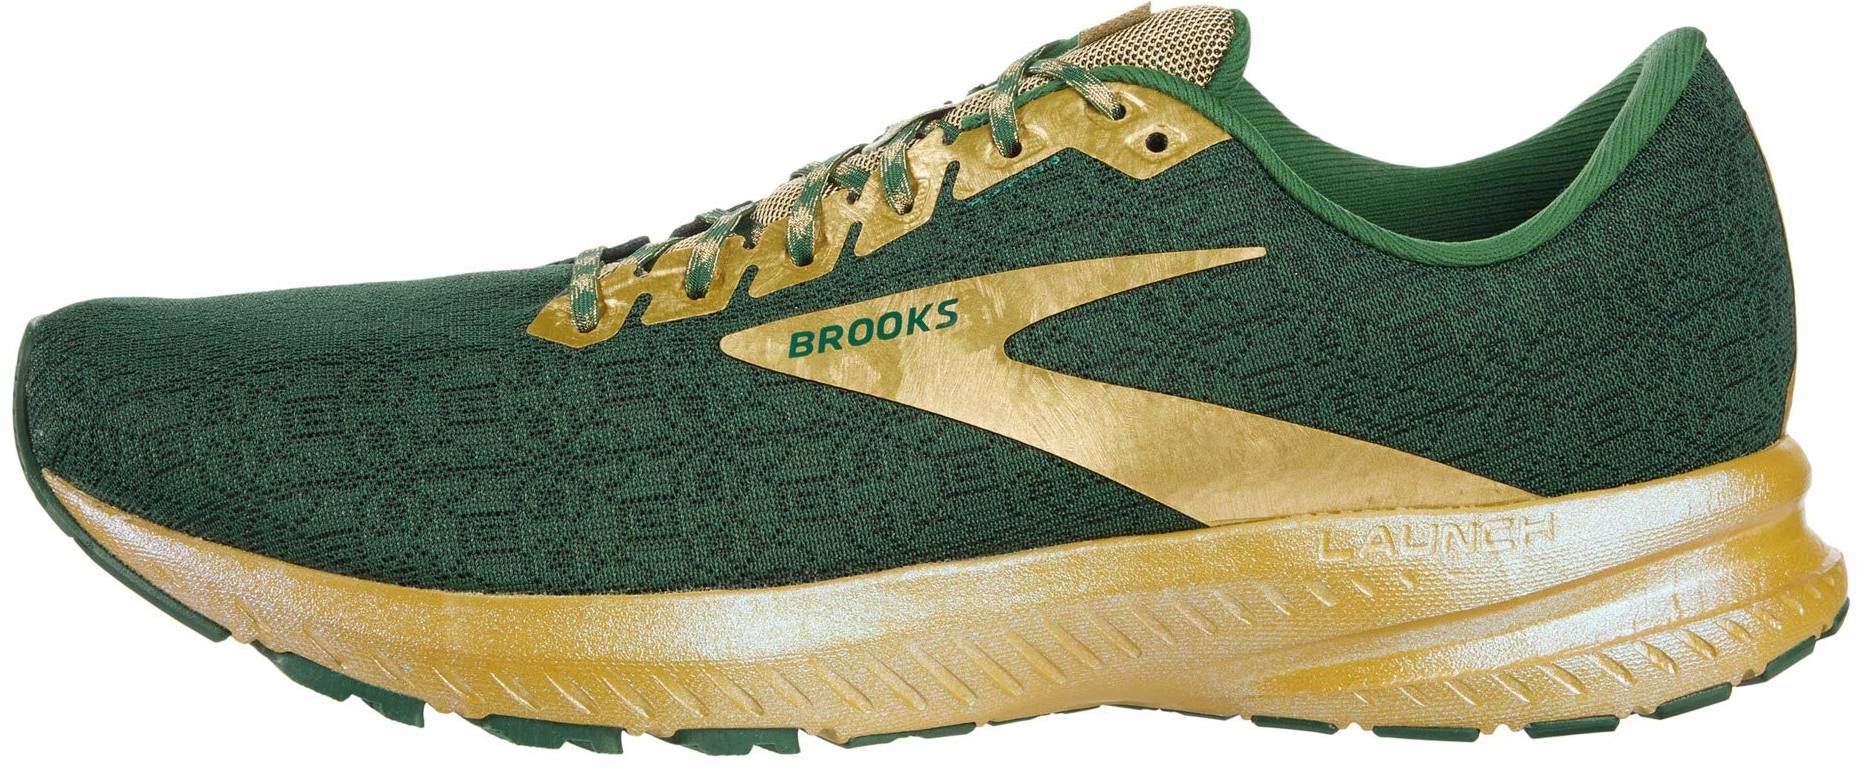 brooks running shoes green